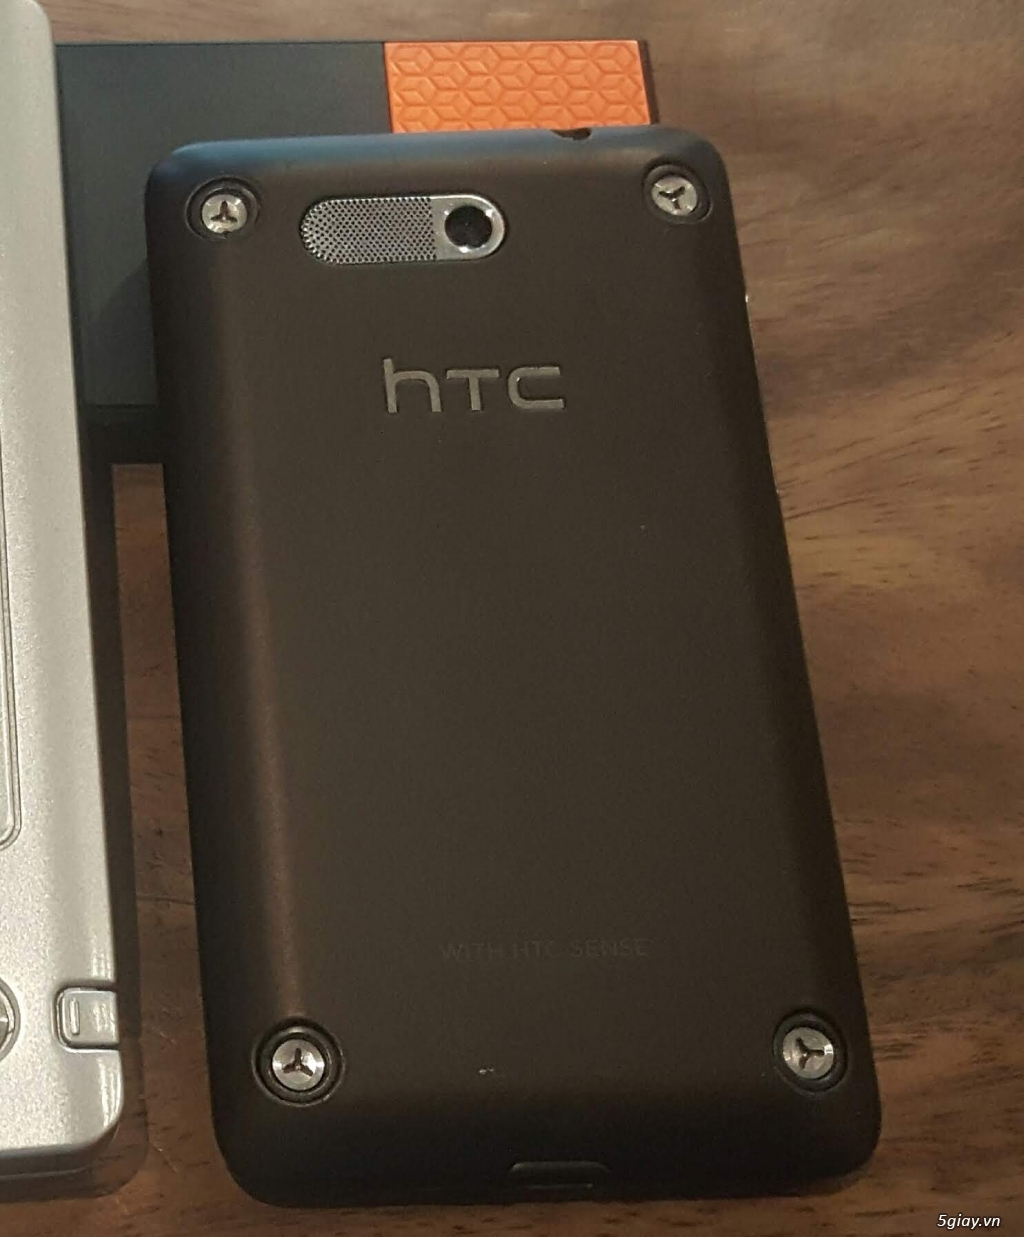 O2 Exec, O2 Orbit, HTC HD mini, Nokia N900 - 7